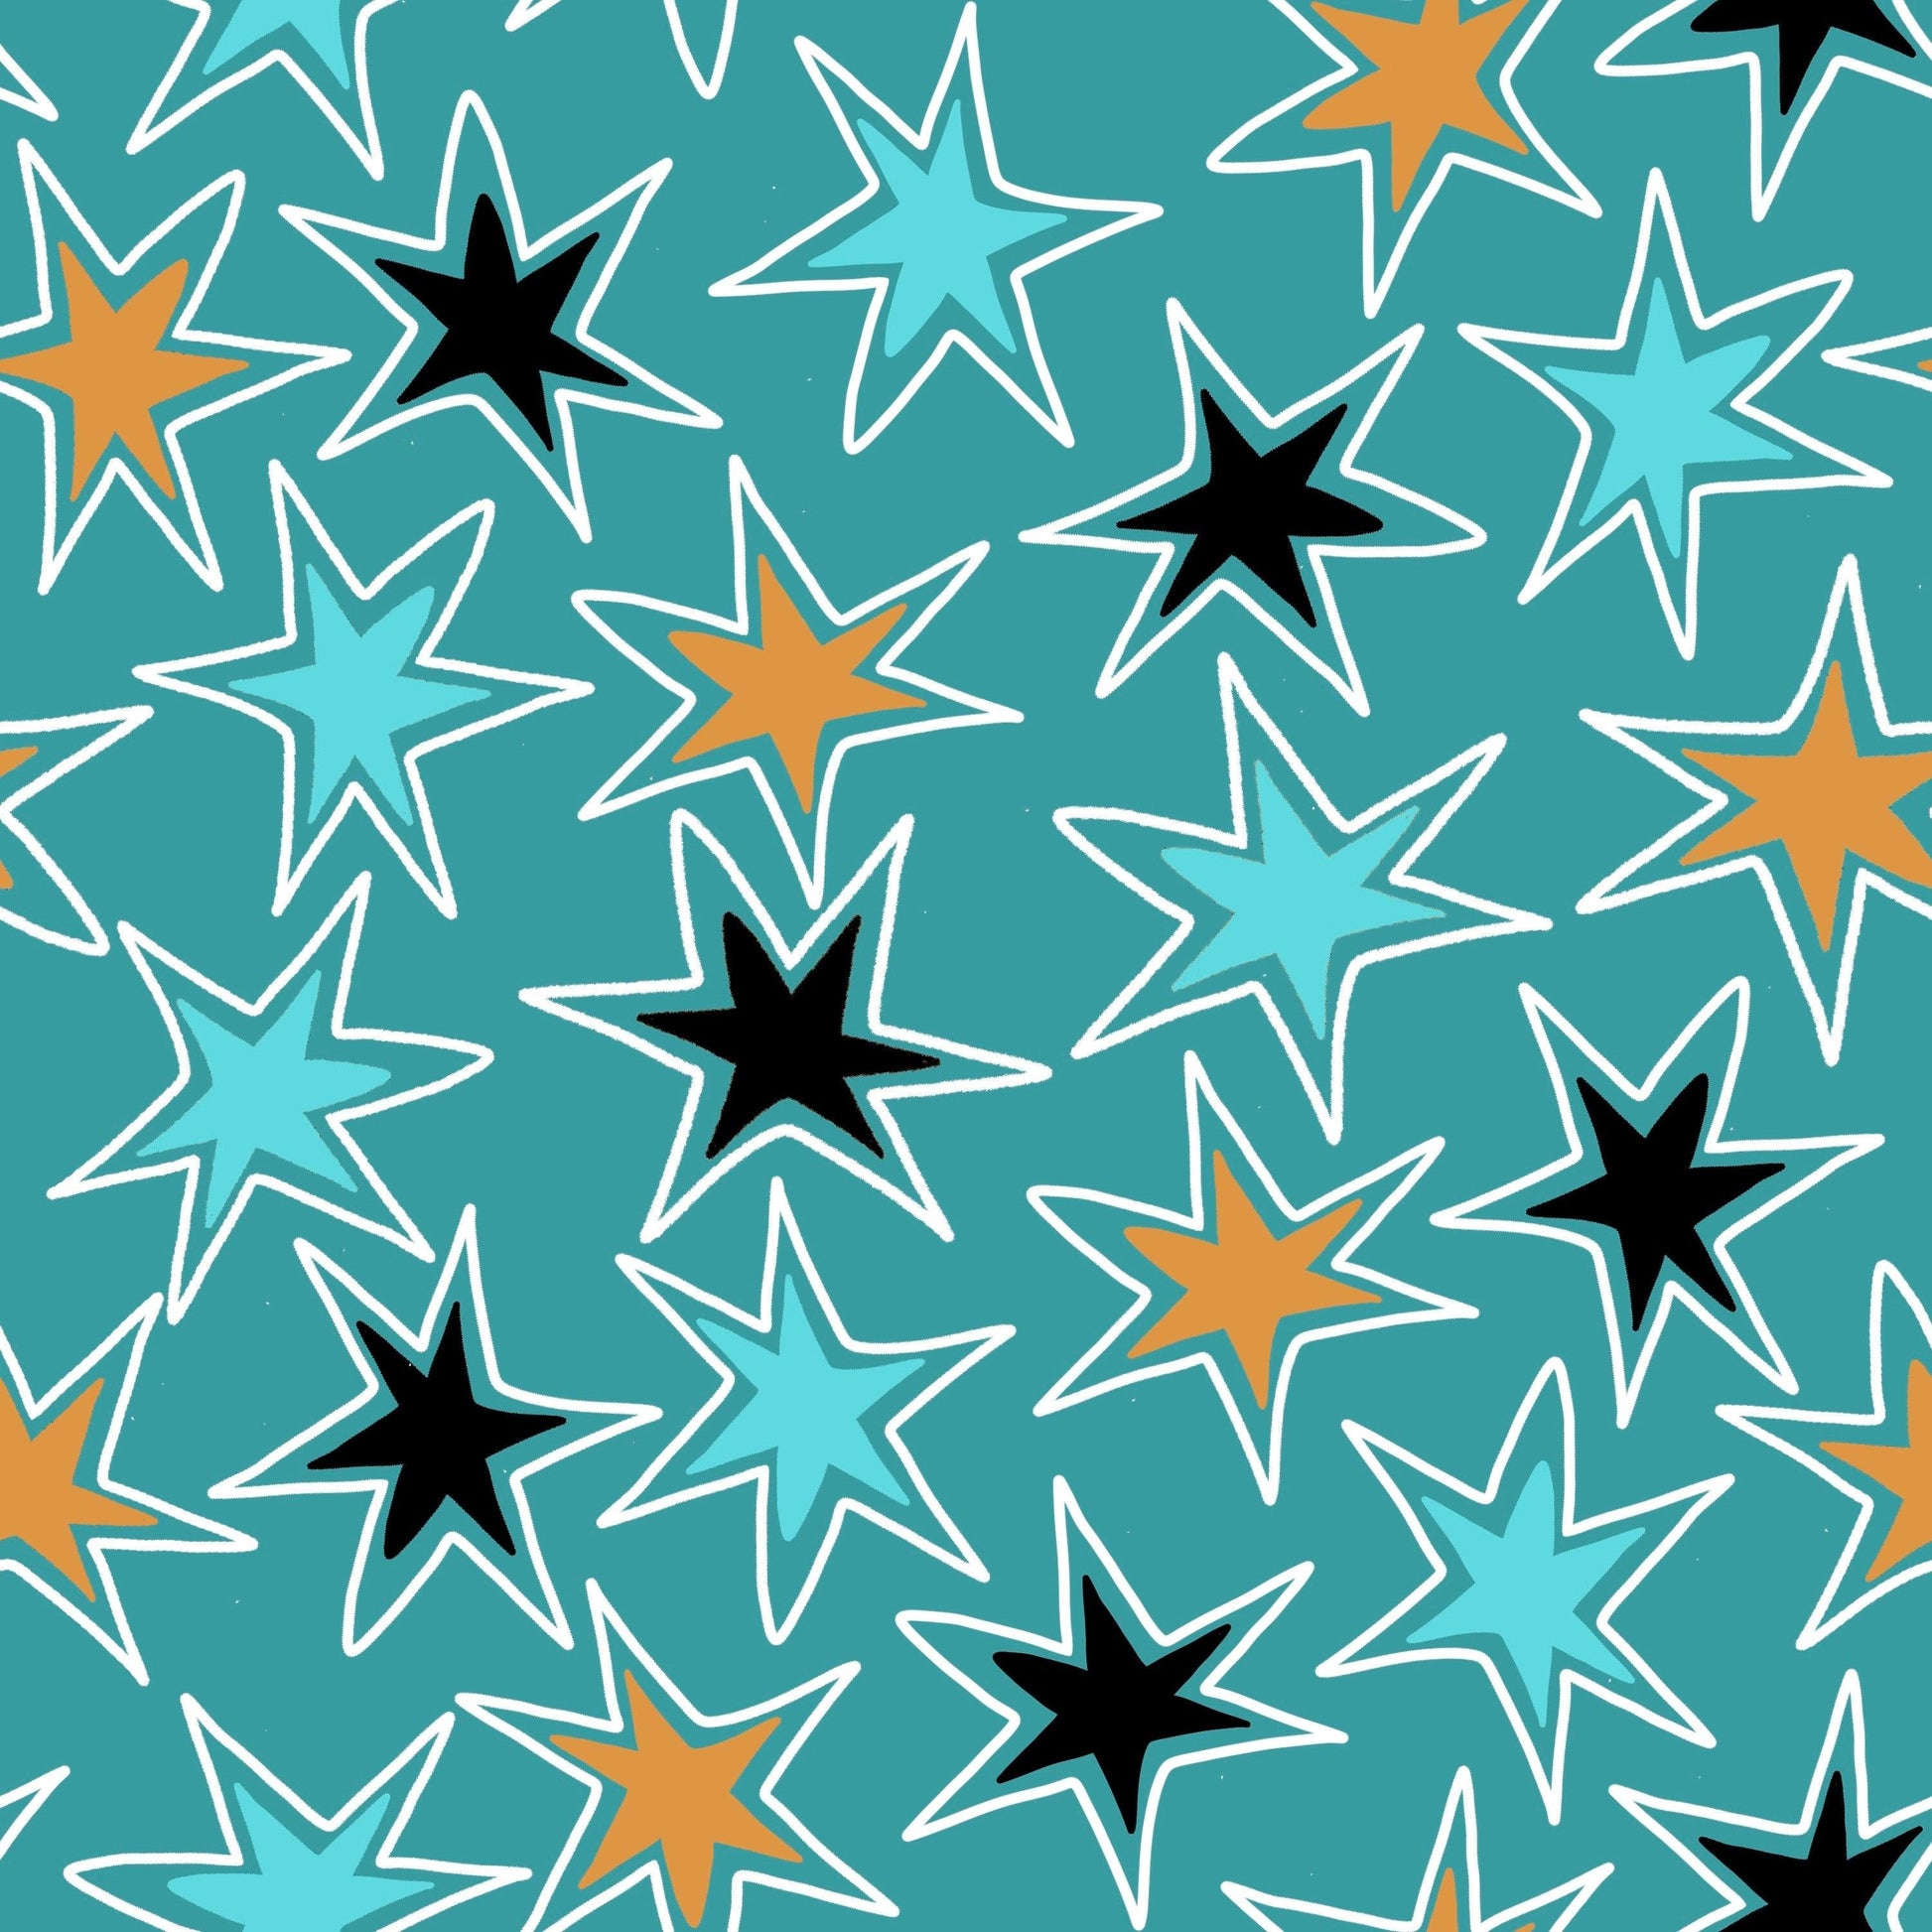 Texas Stars on Blue Bamboo/Spandex Jersey Fabric - Nature's Fabrics